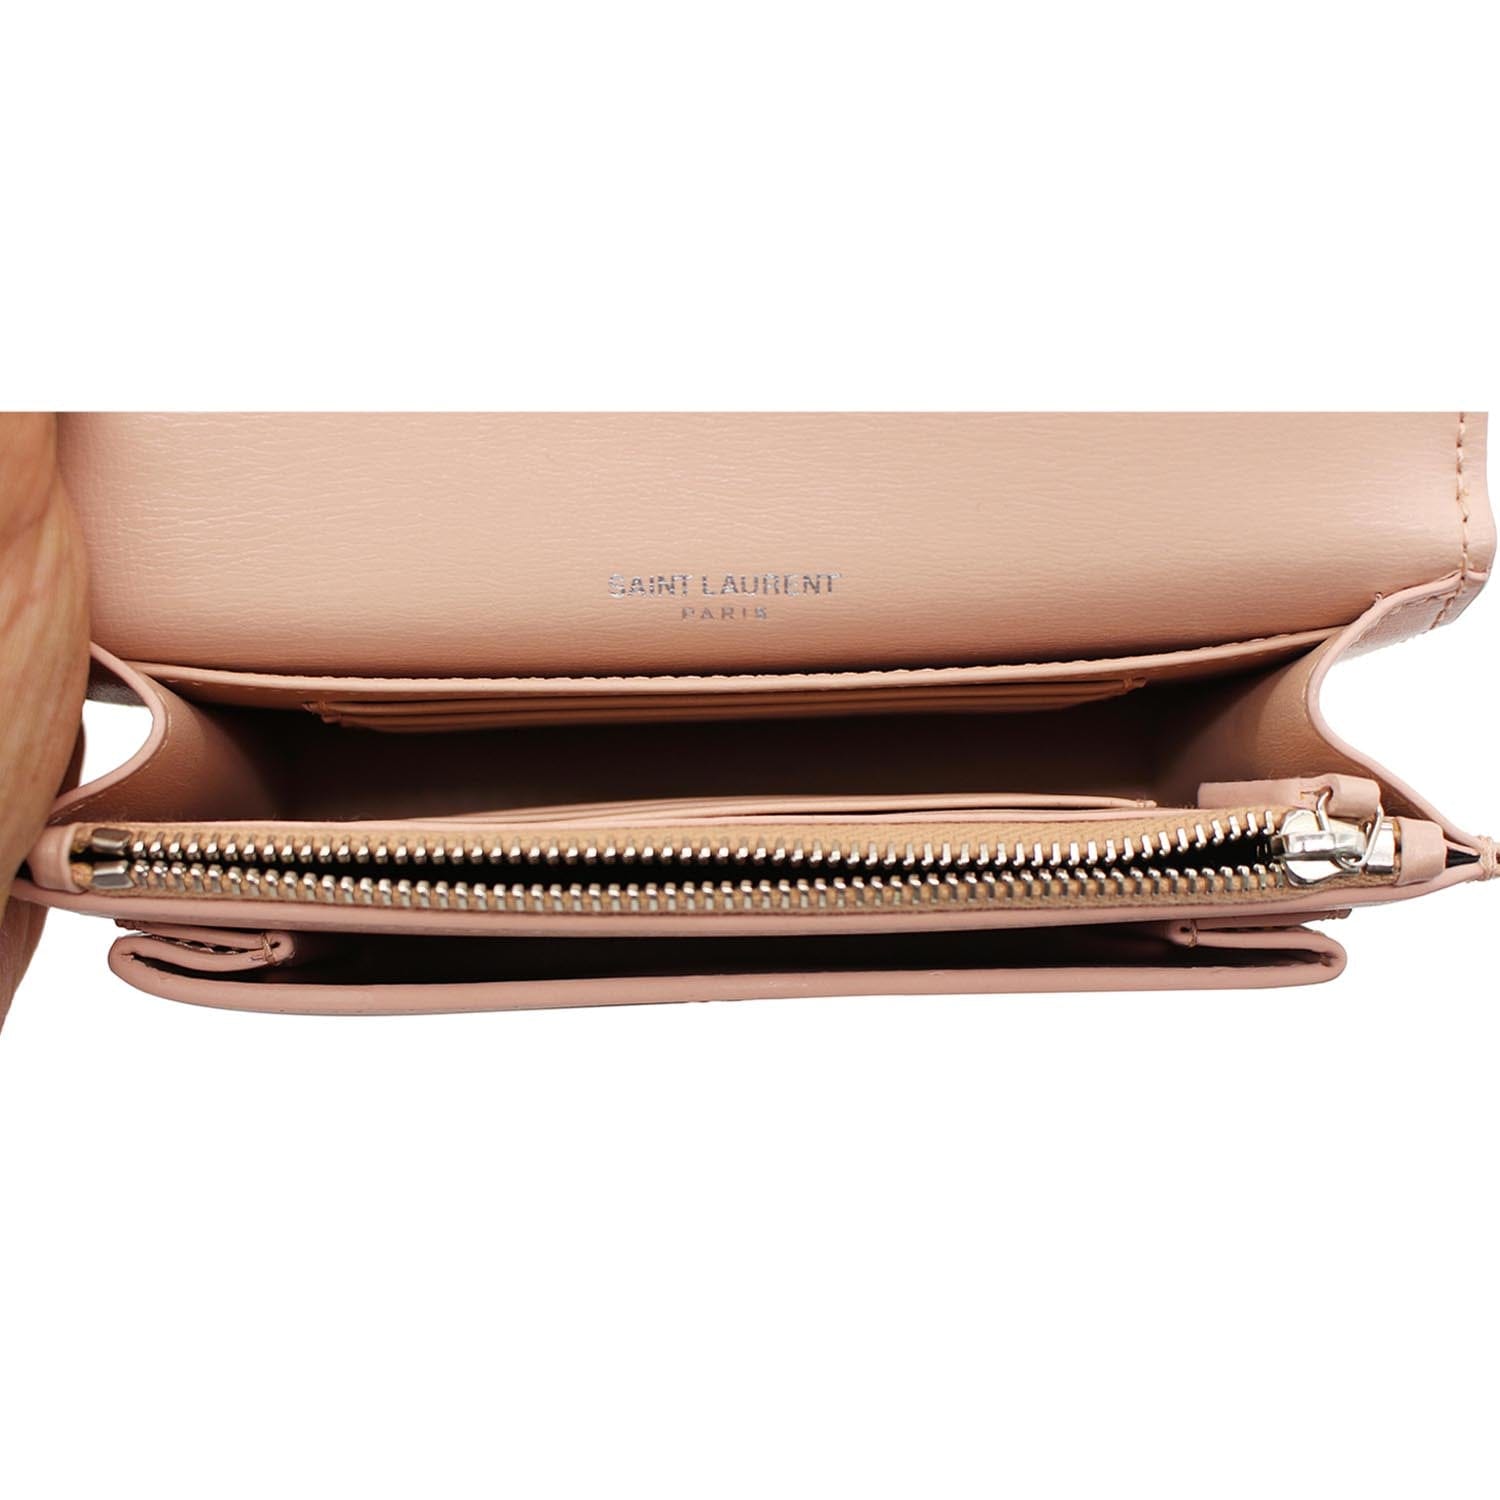 Saint Laurent - Authenticated Sunset Handbag - Leather Pink Plain for Women, Never Worn